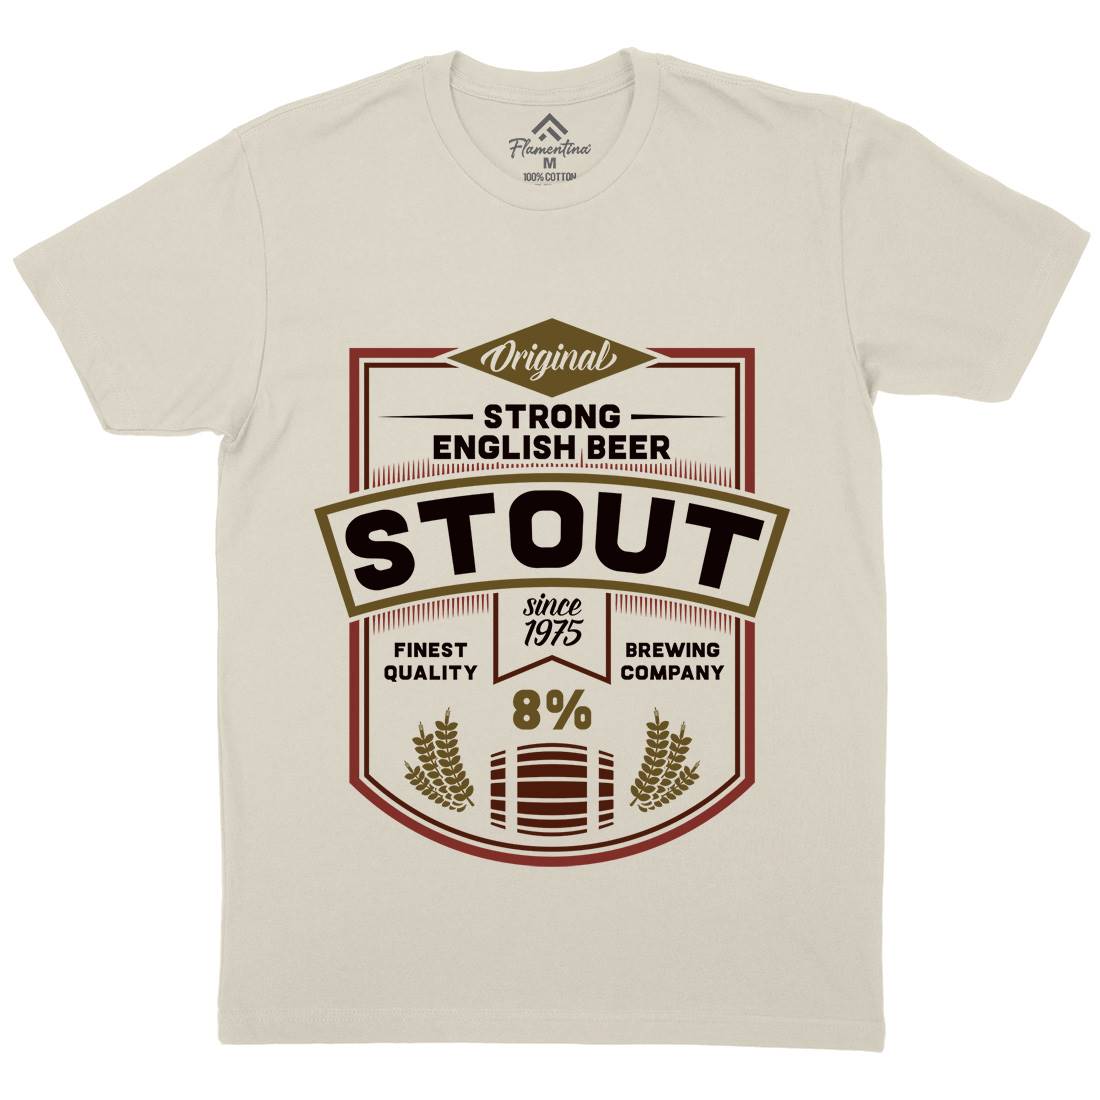 Beer Stout Mens Organic Crew Neck T-Shirt Drinks C809